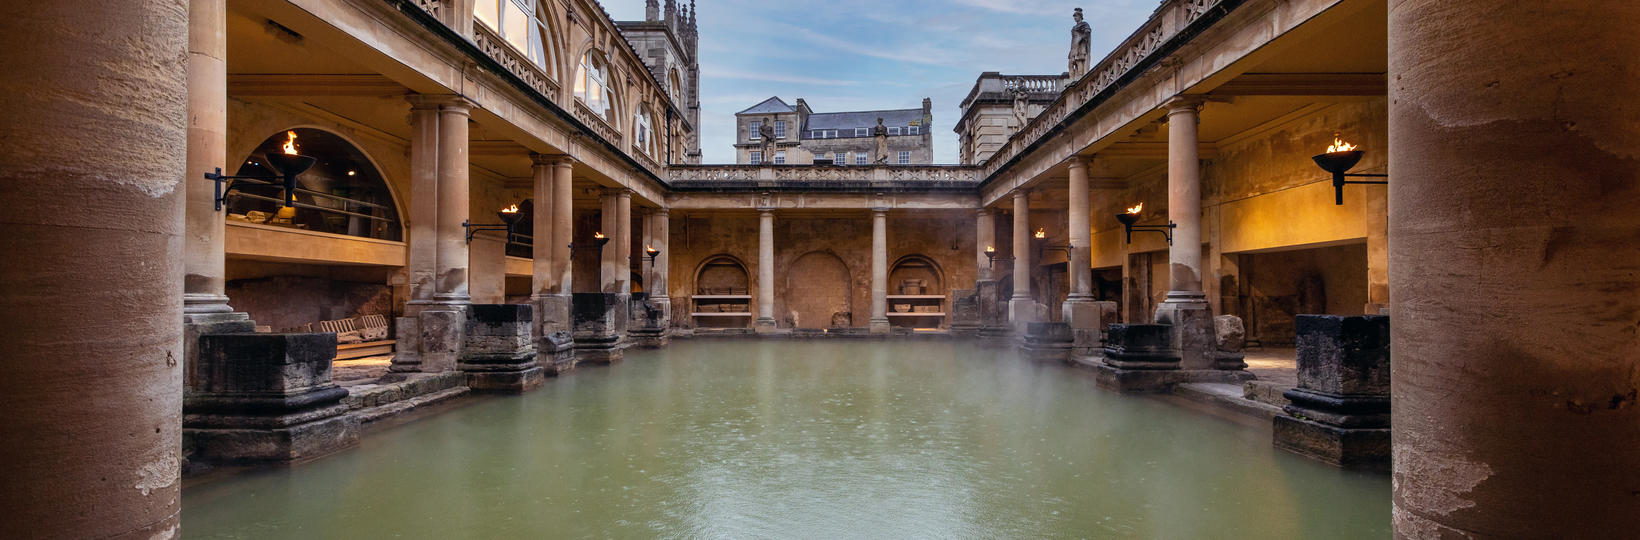 Image: The Great Bath